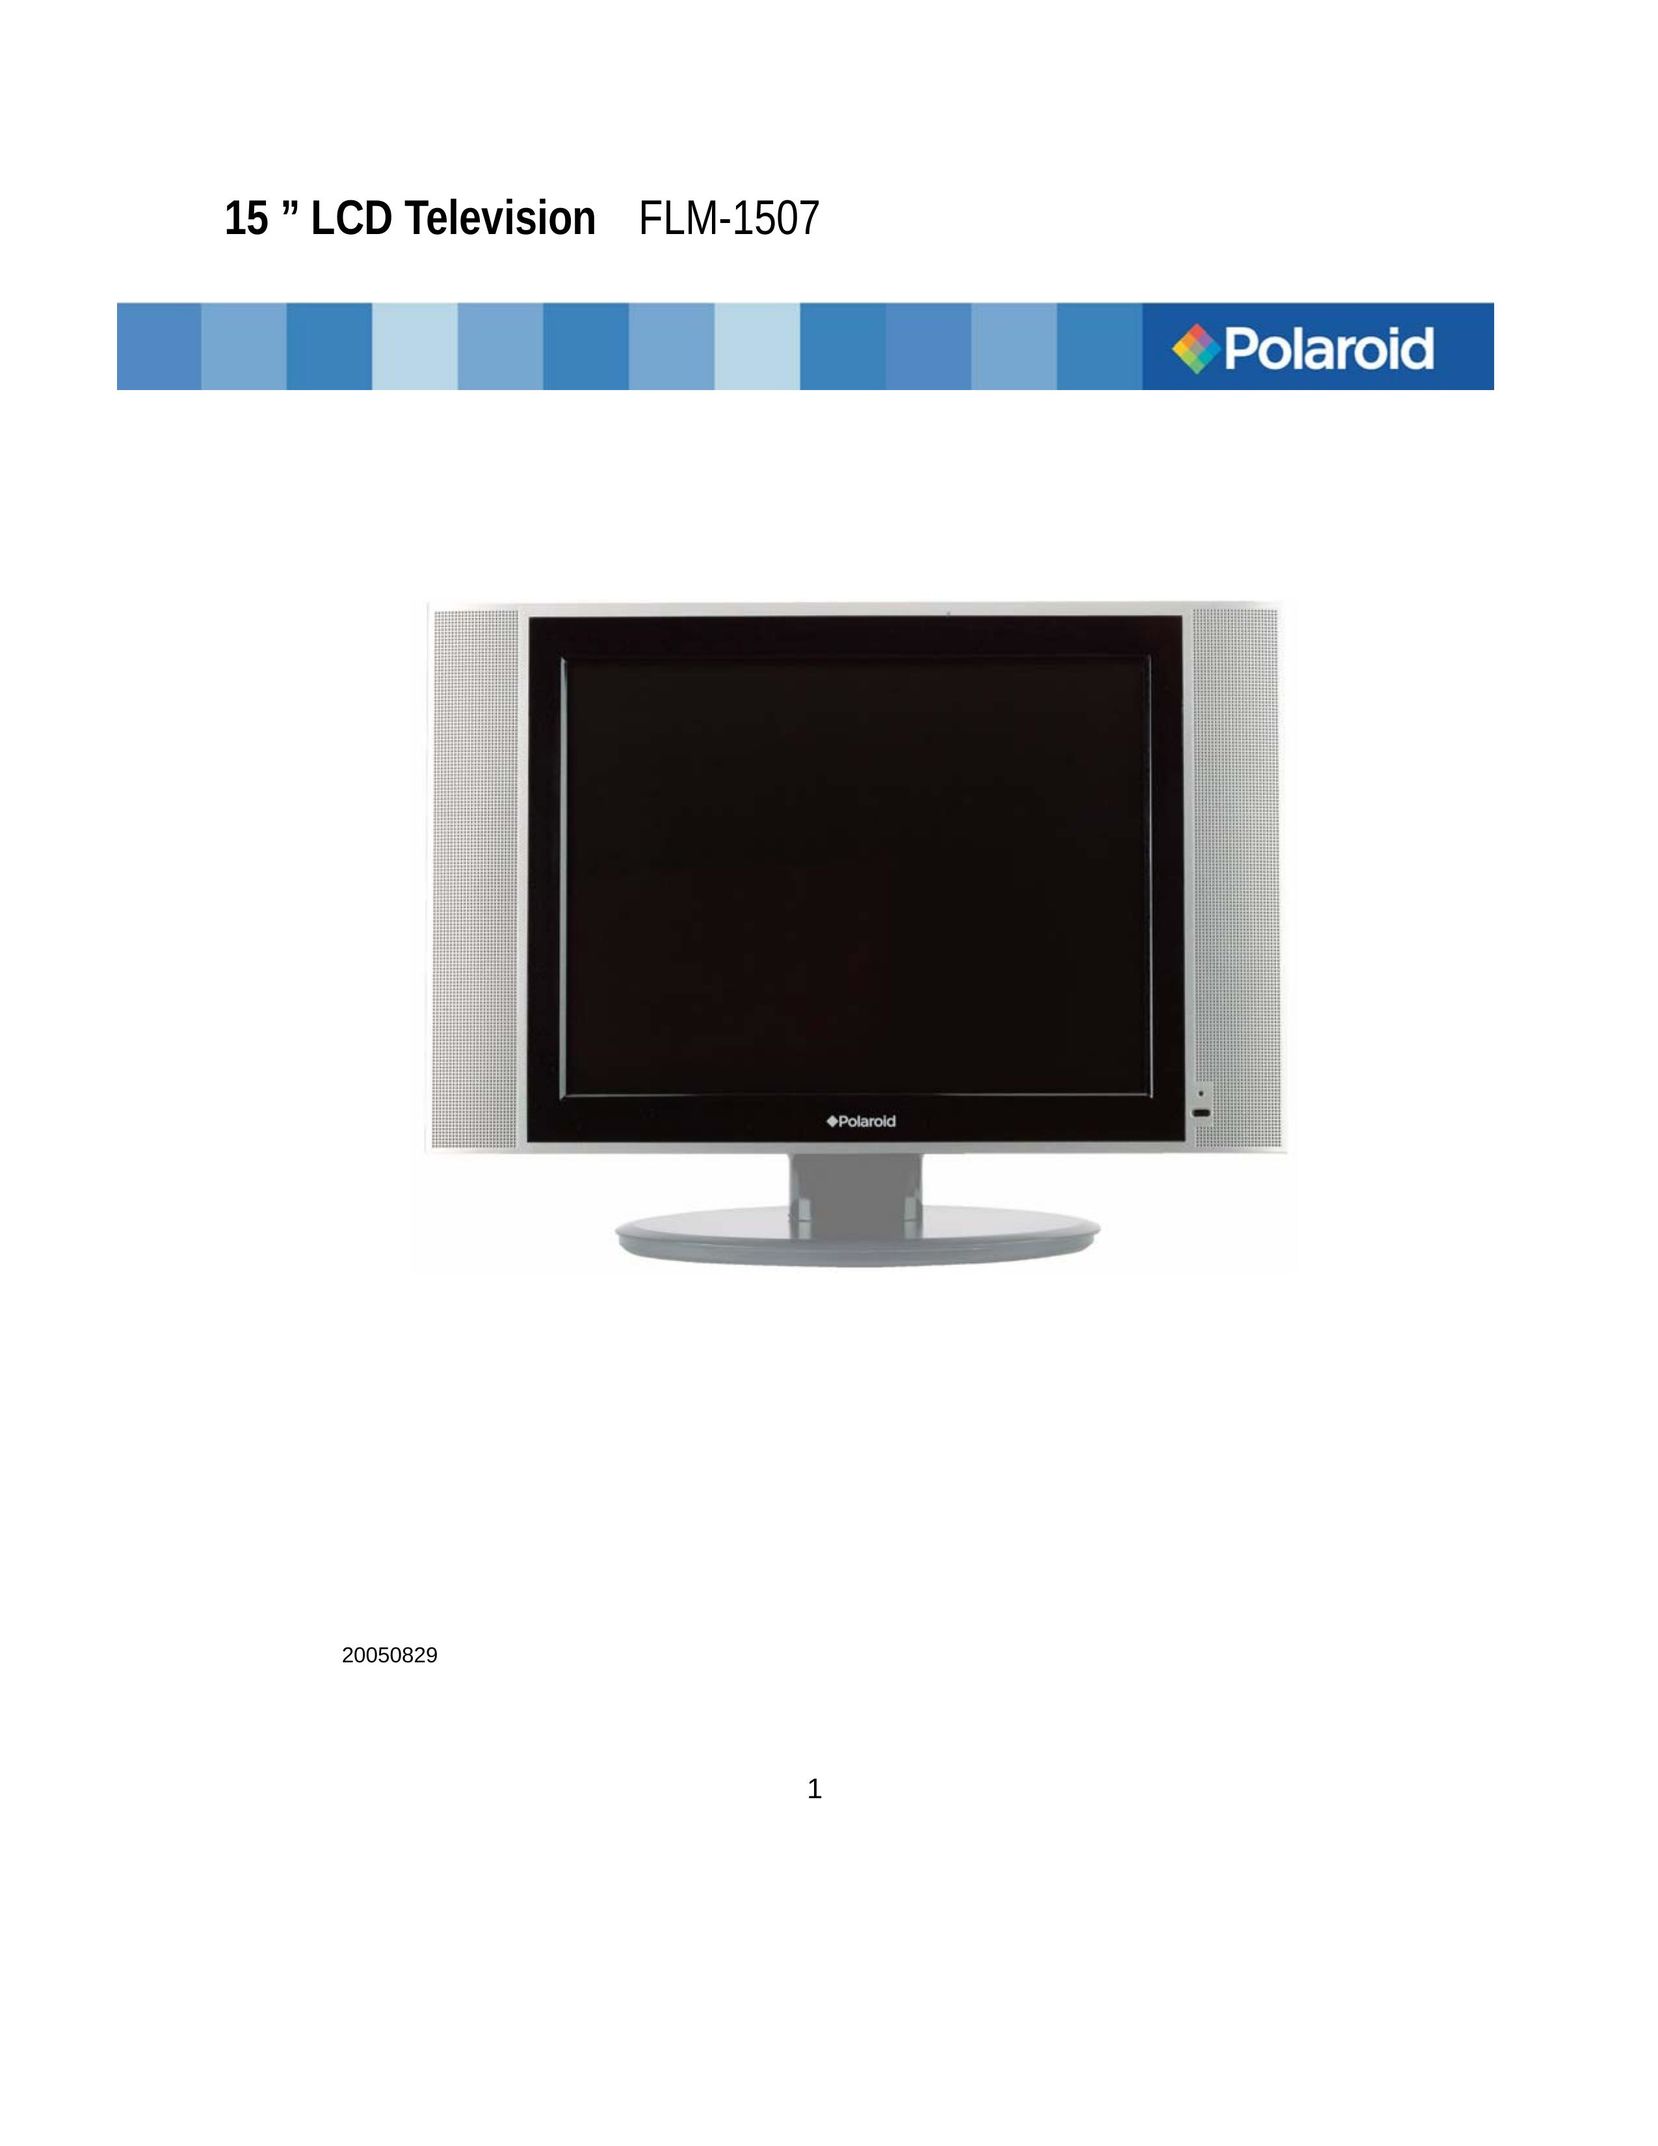 Polaroid FLM-1507 Flat Panel Television User Manual